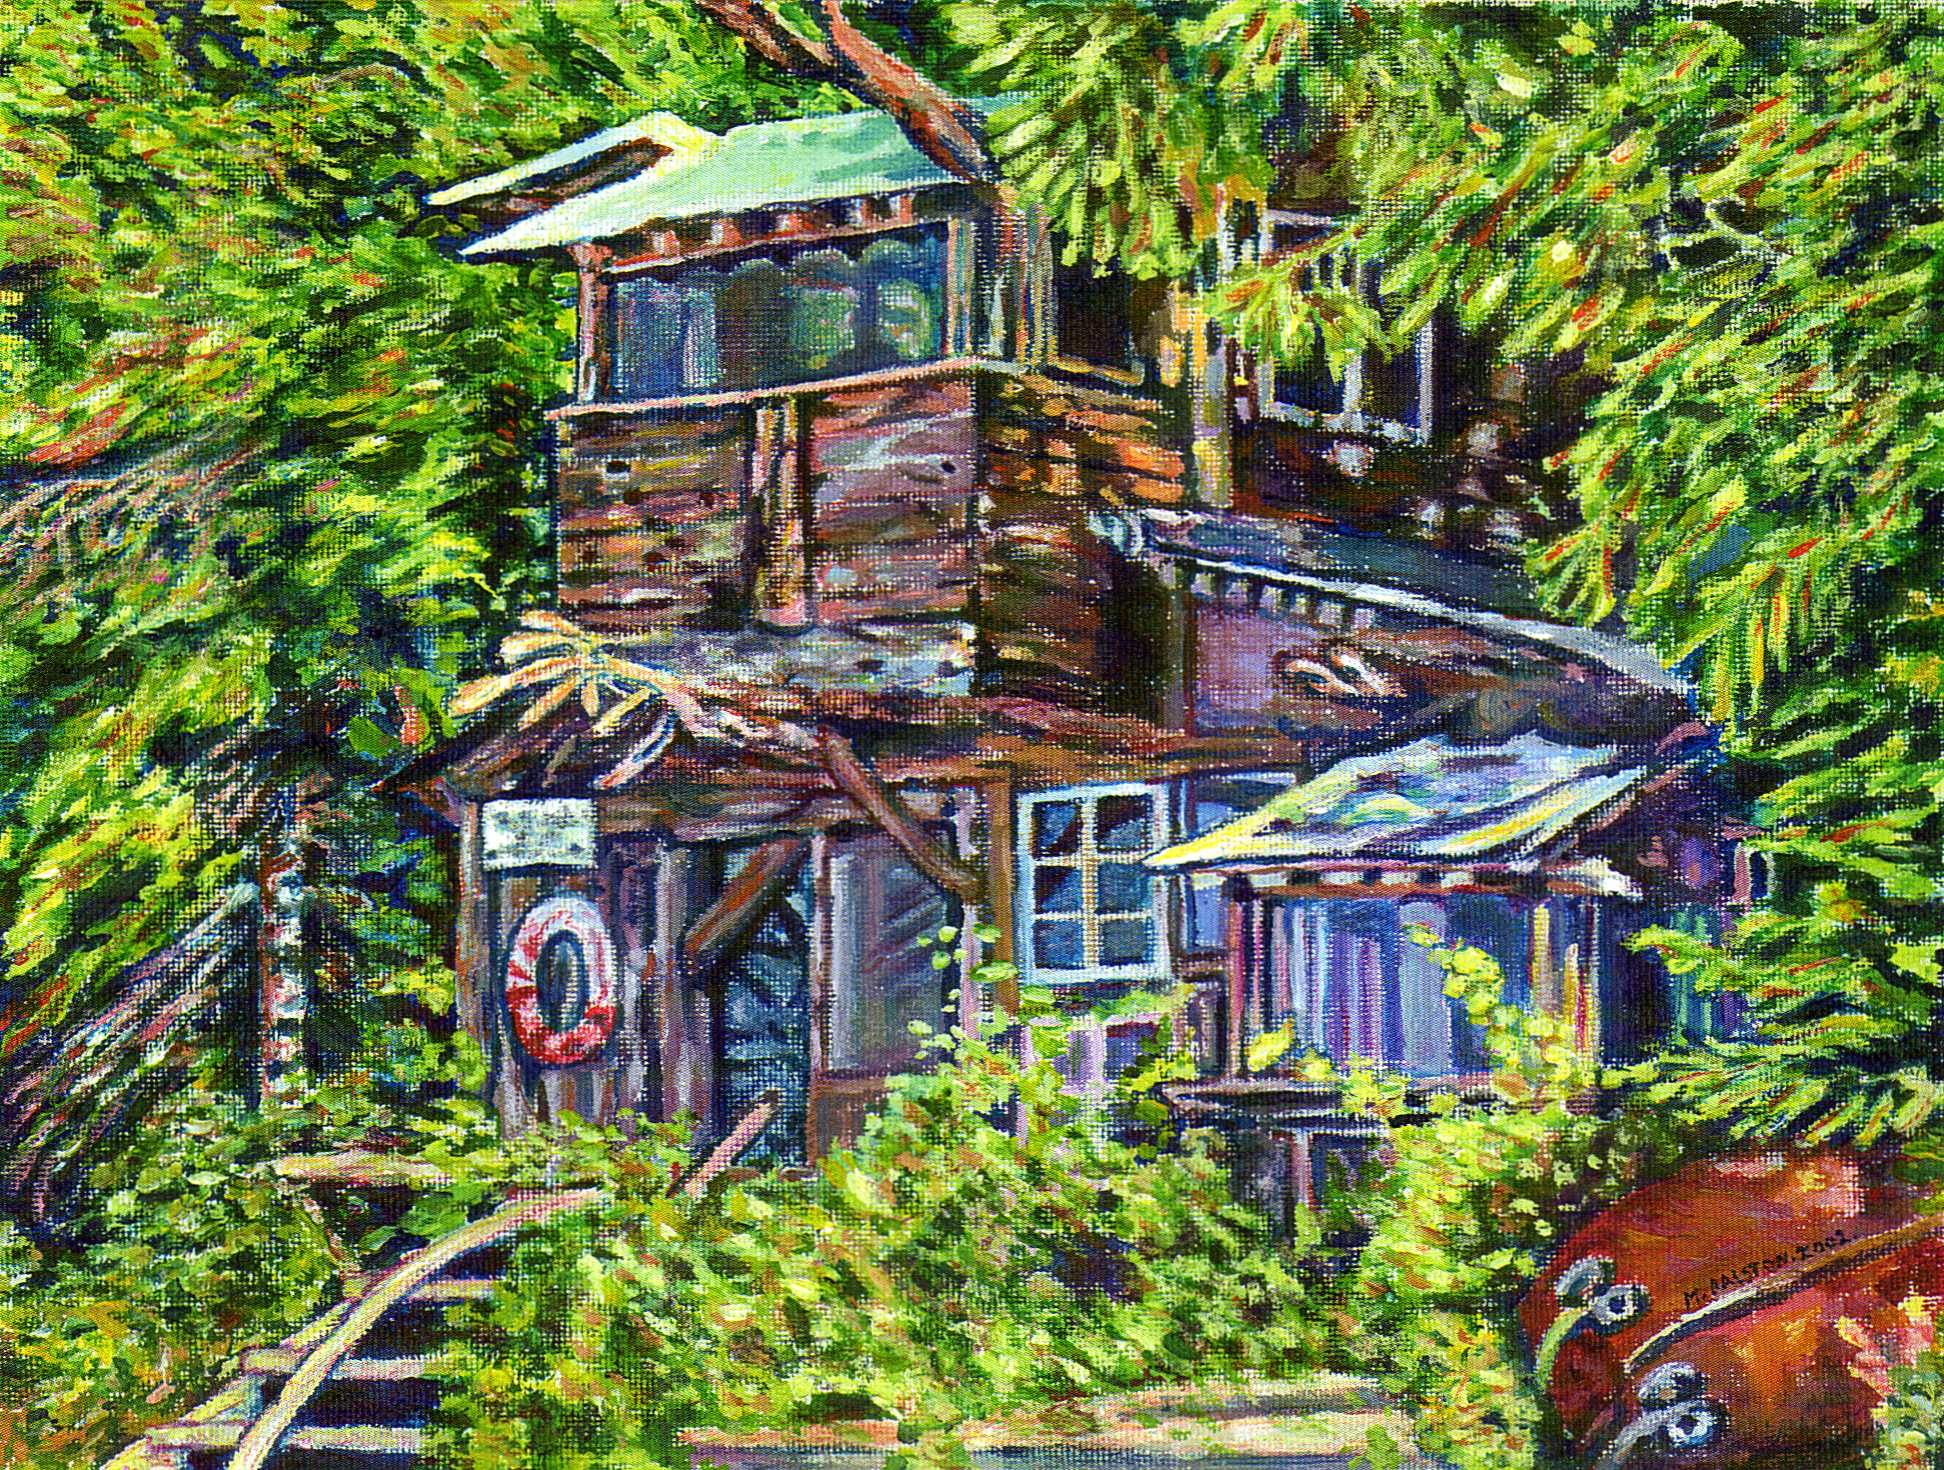 Acrylic painting of a denman island boathouse by Morgan Ralston